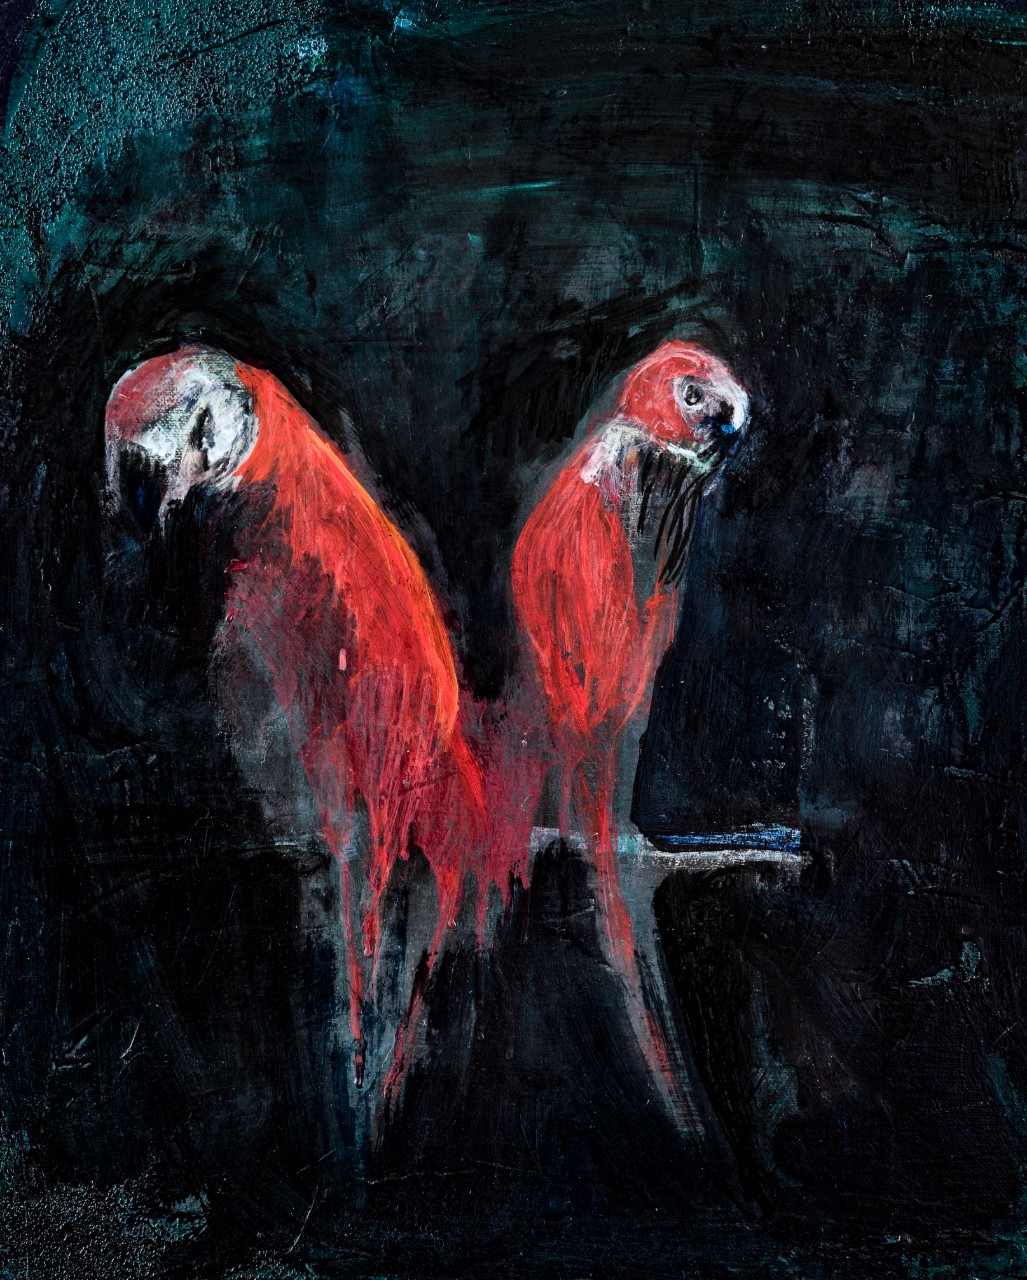 Two+Red+Birds+Christine+Gibbs+artist+Melbourne.jpg